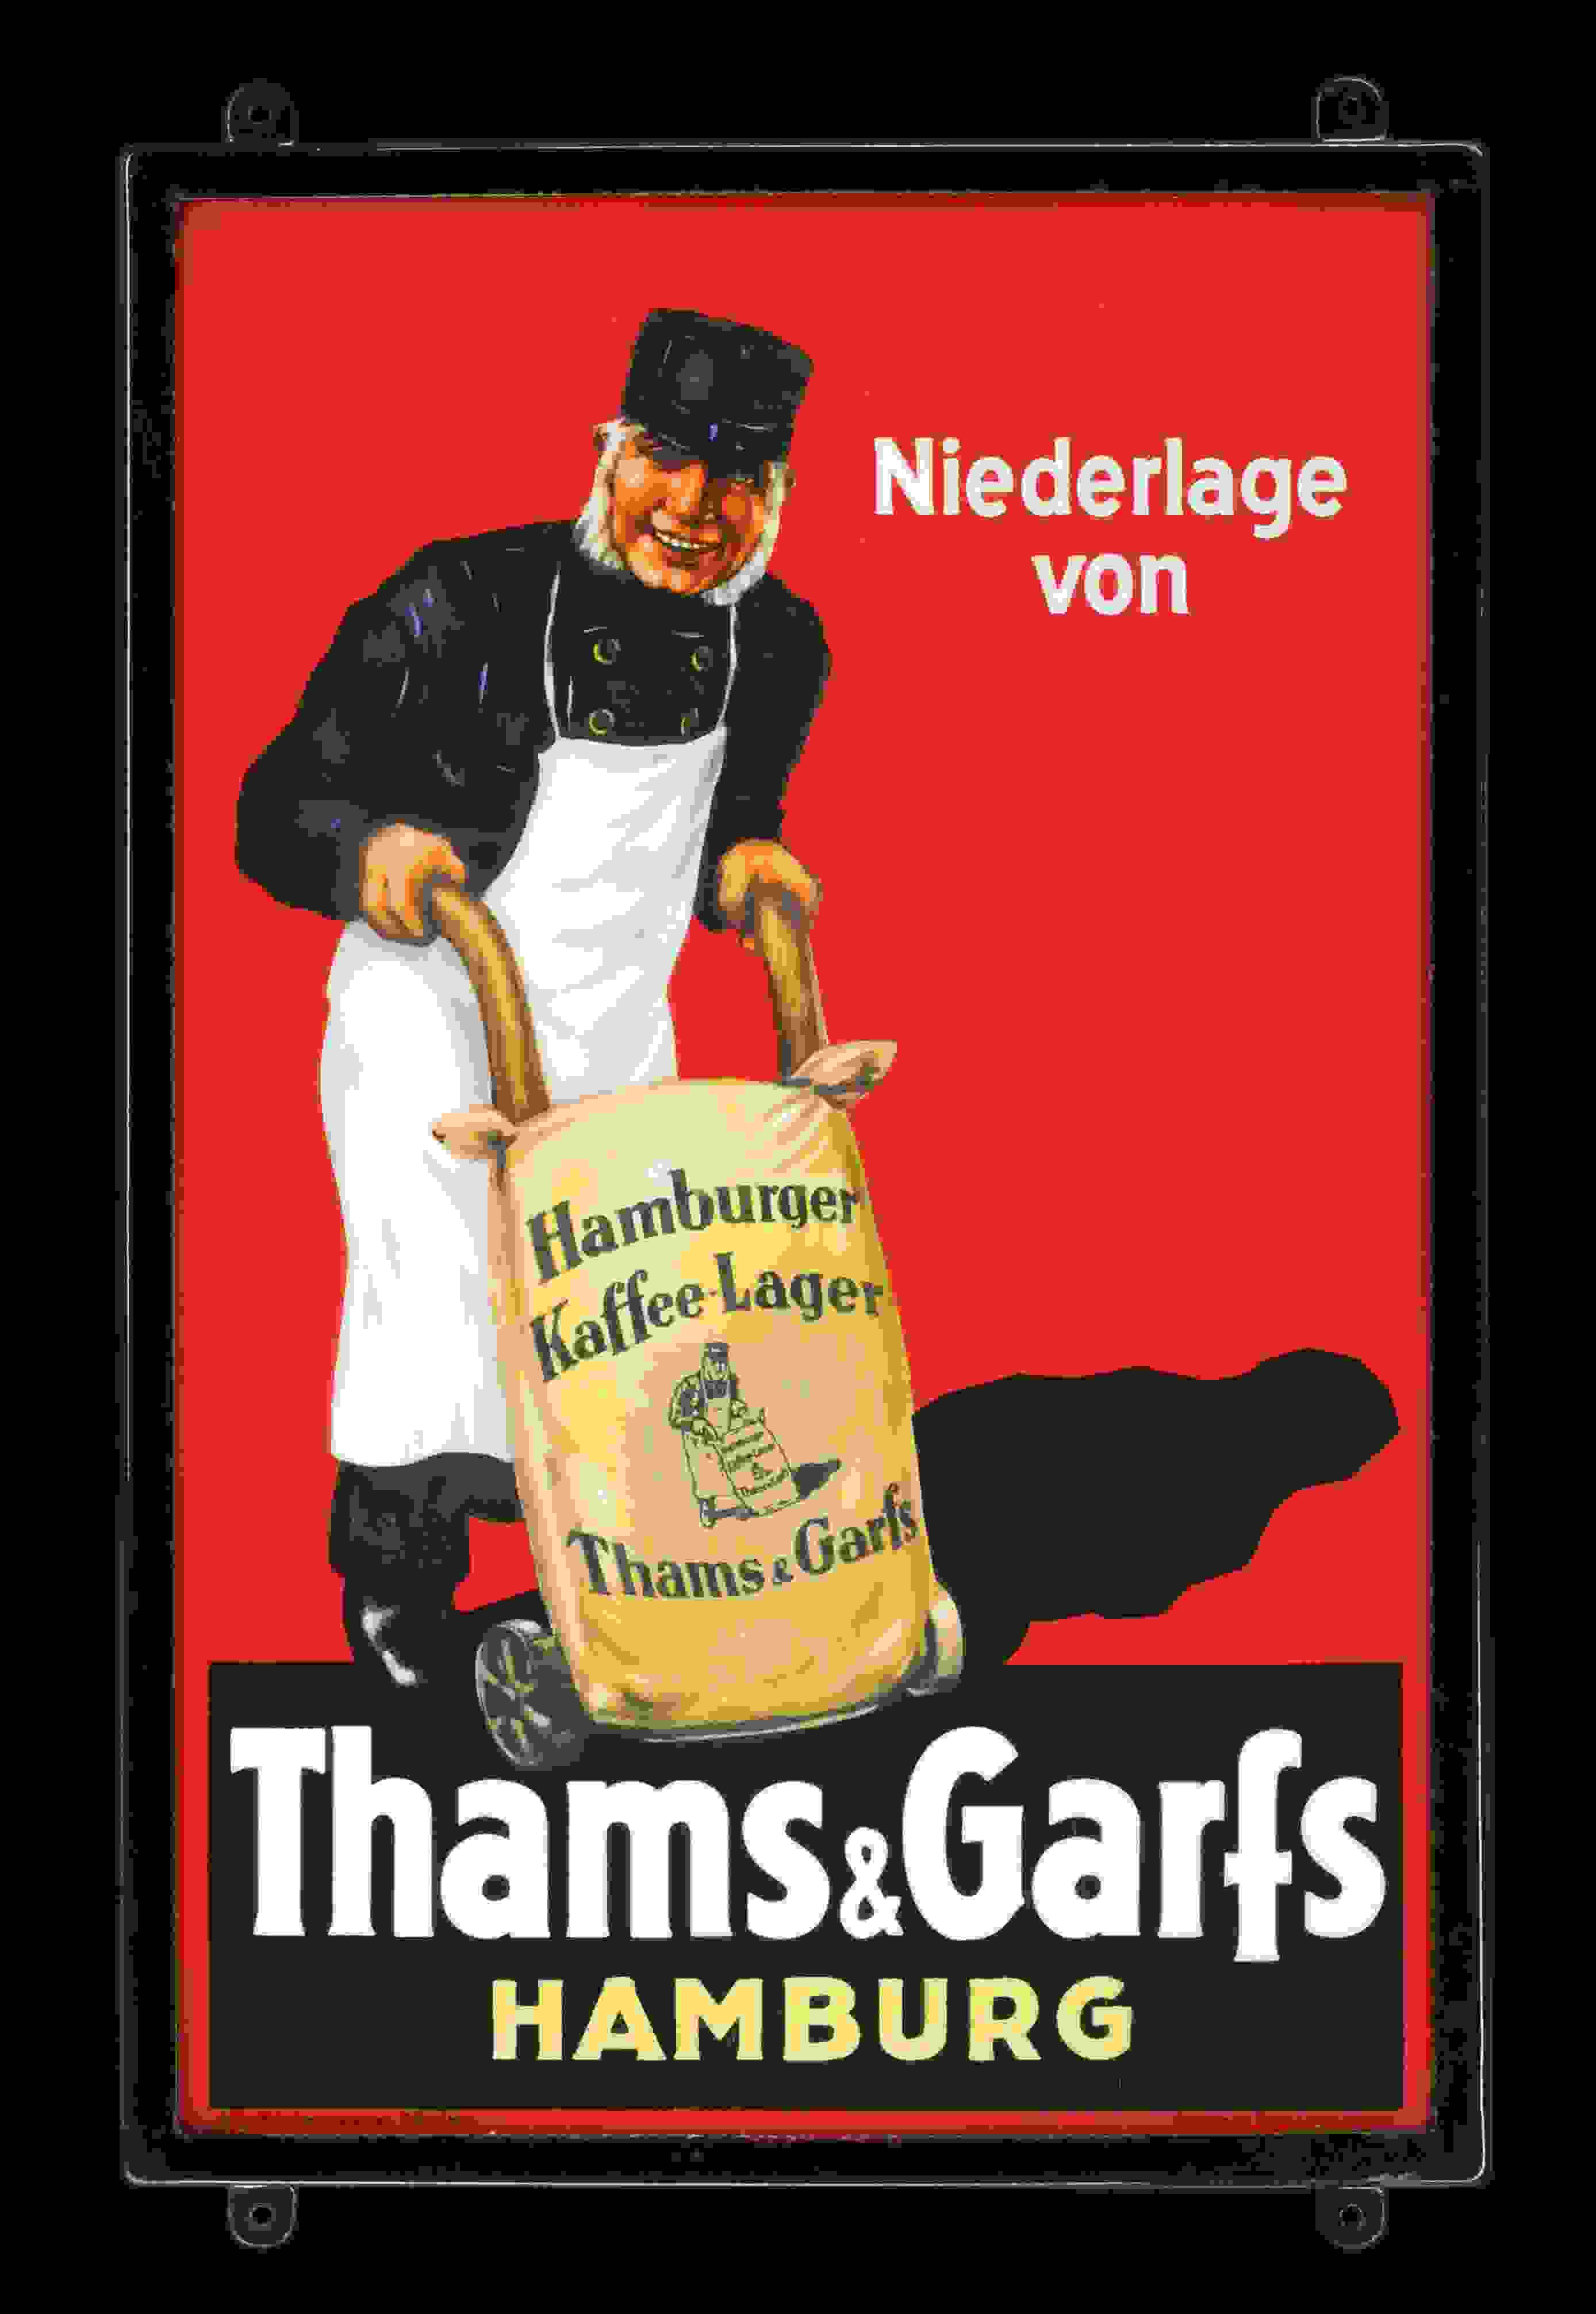 Thams & Garfs Kaffee-Lager 